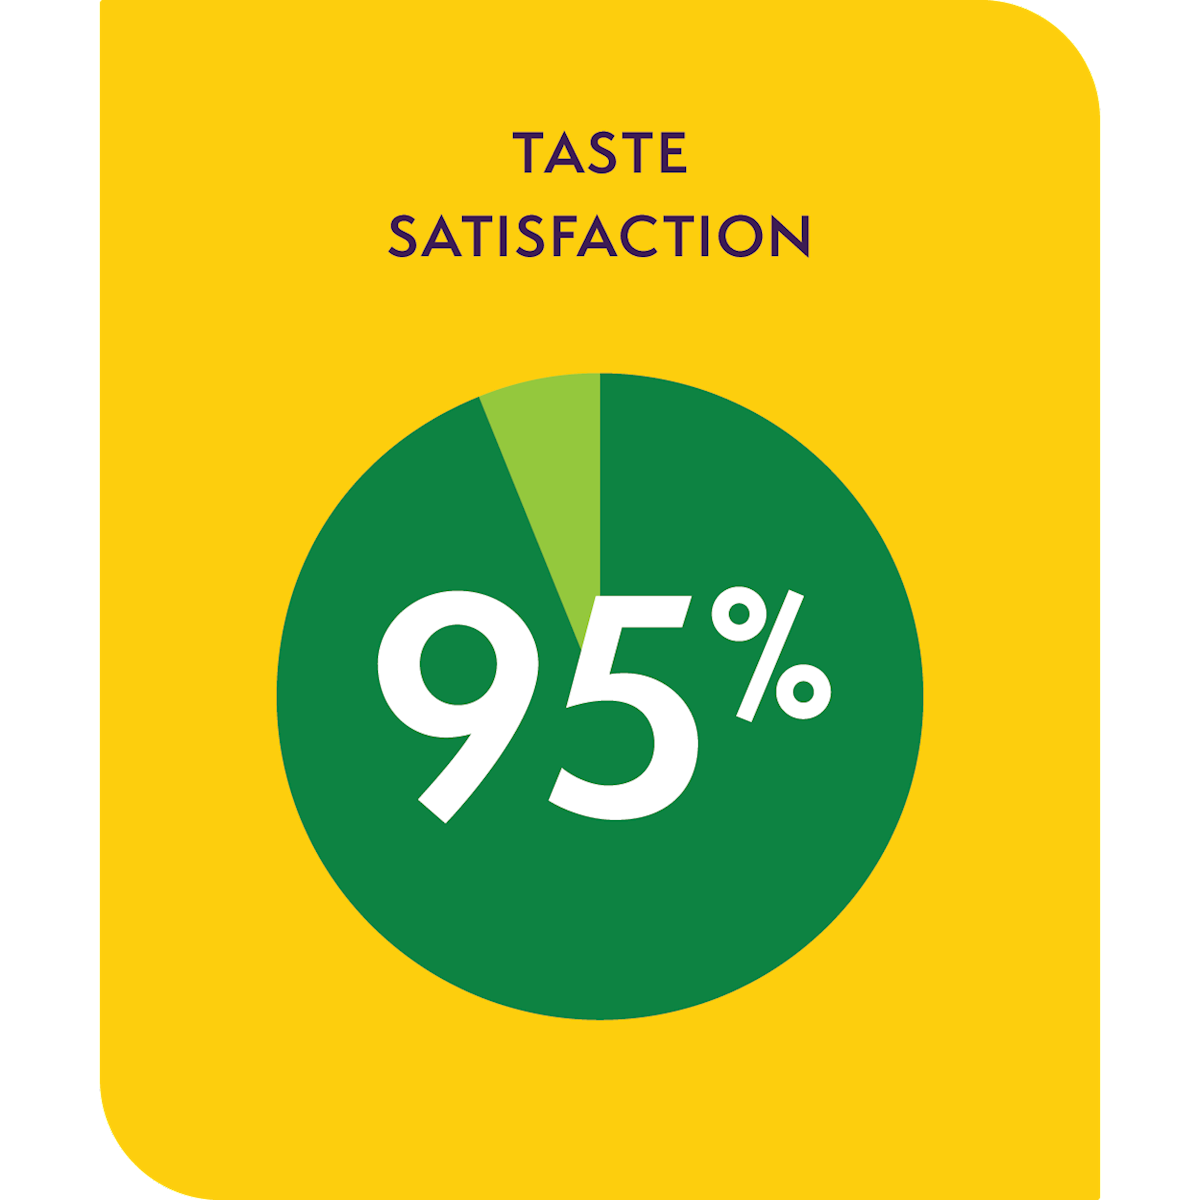 Overall Flavor Satisfaction 94%